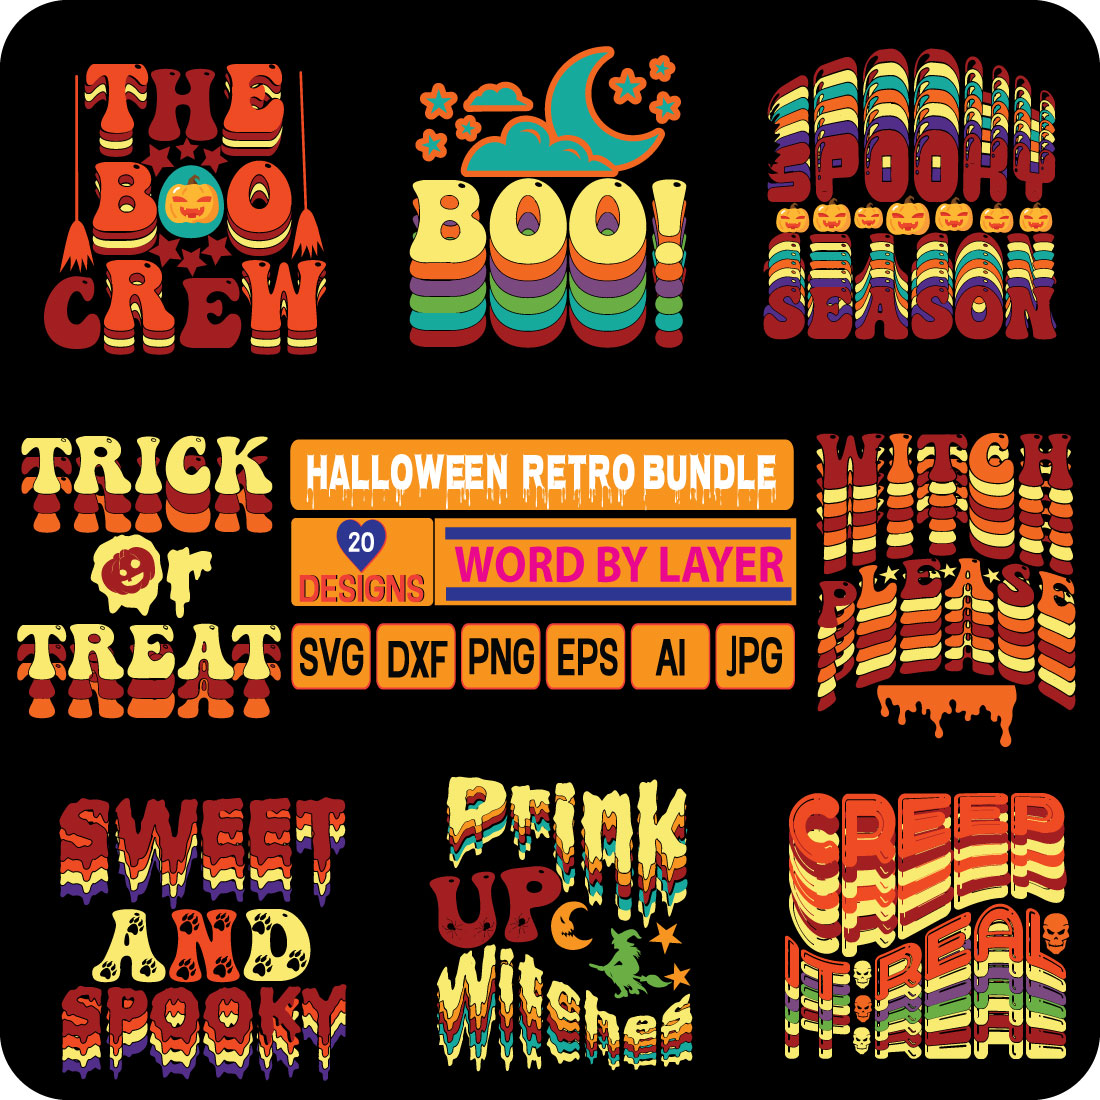 Retro Halloween SVG Bundle main cover.